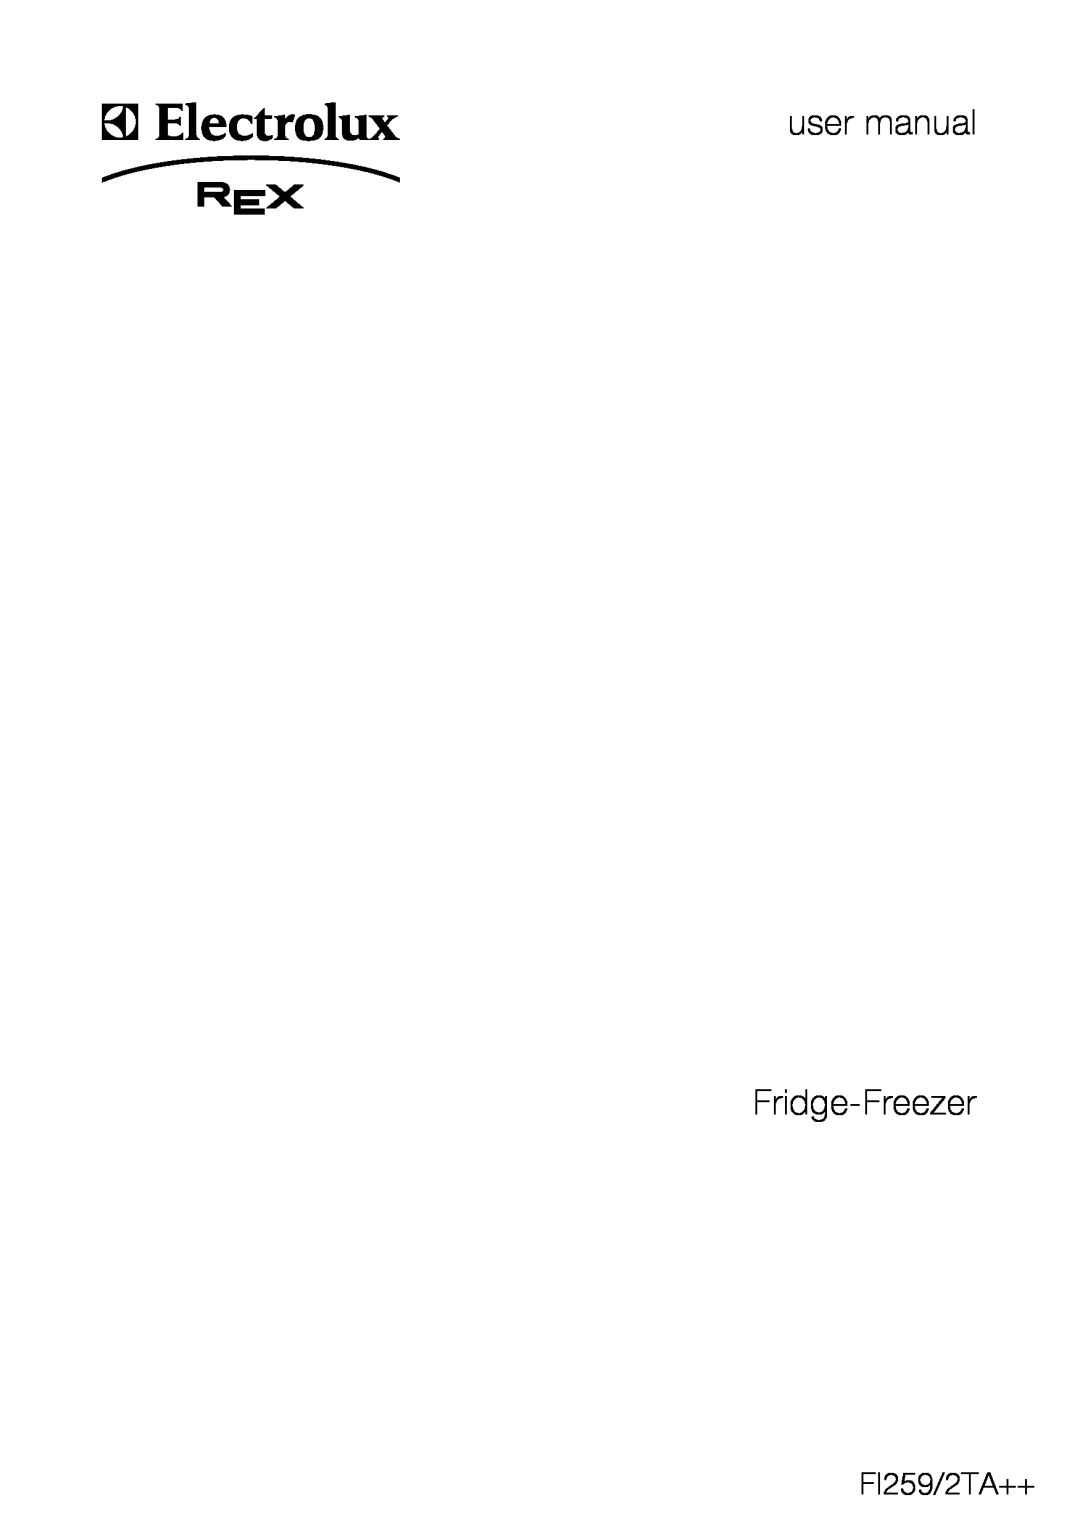 Electrolux FI259/2TA++ user manual Fridge-Freezer 